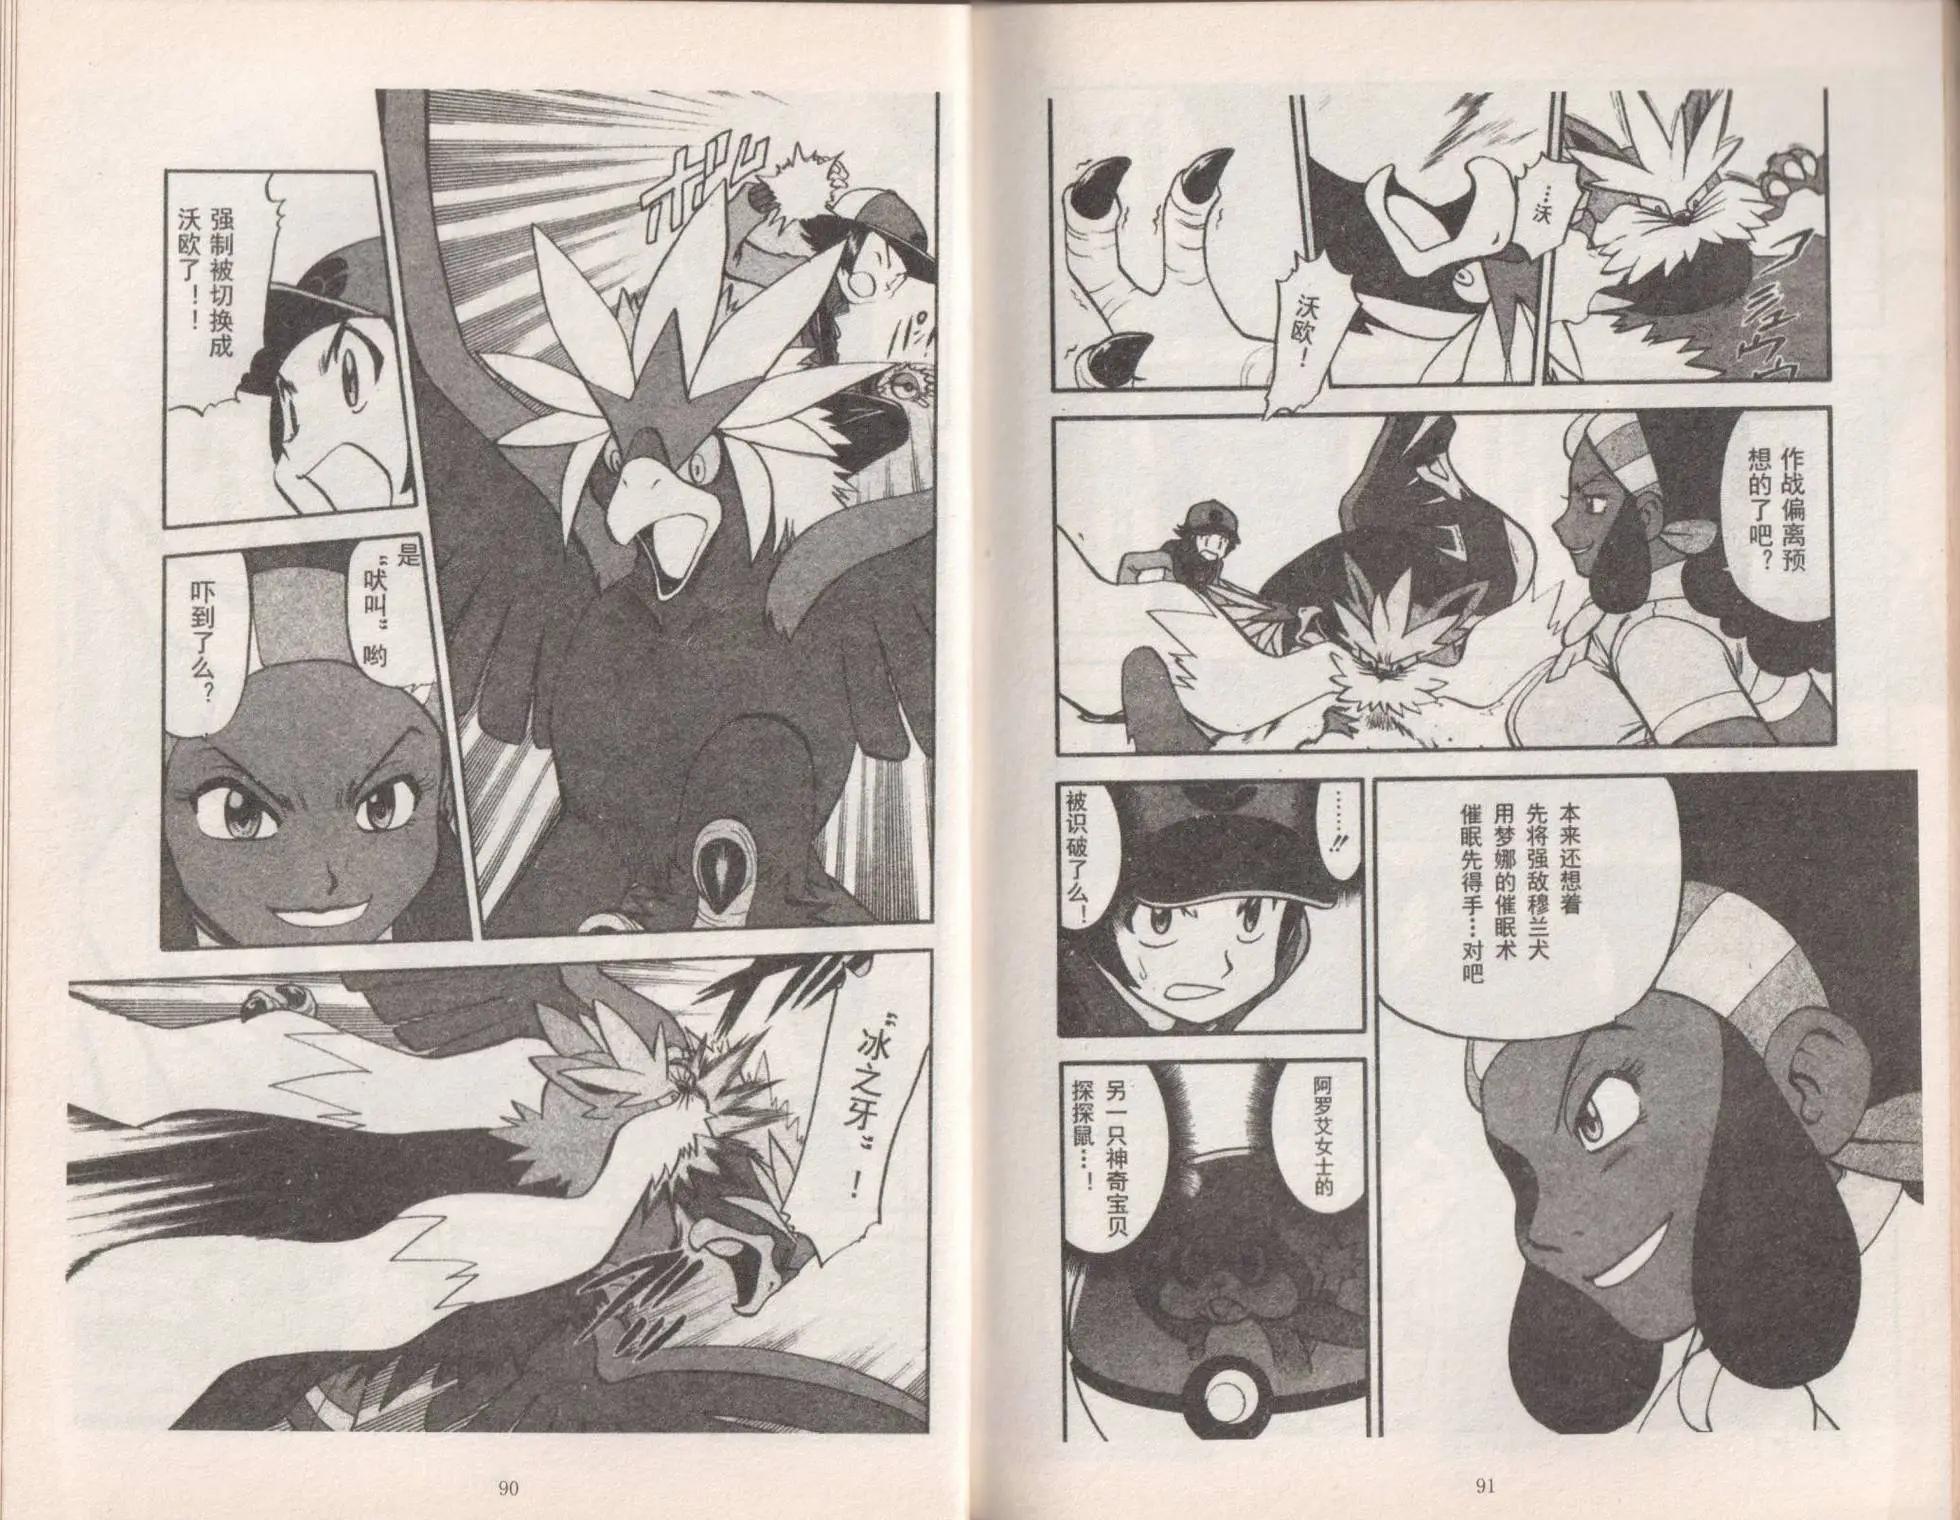 口袋迷pokemon - 第50卷(1/2) - 7